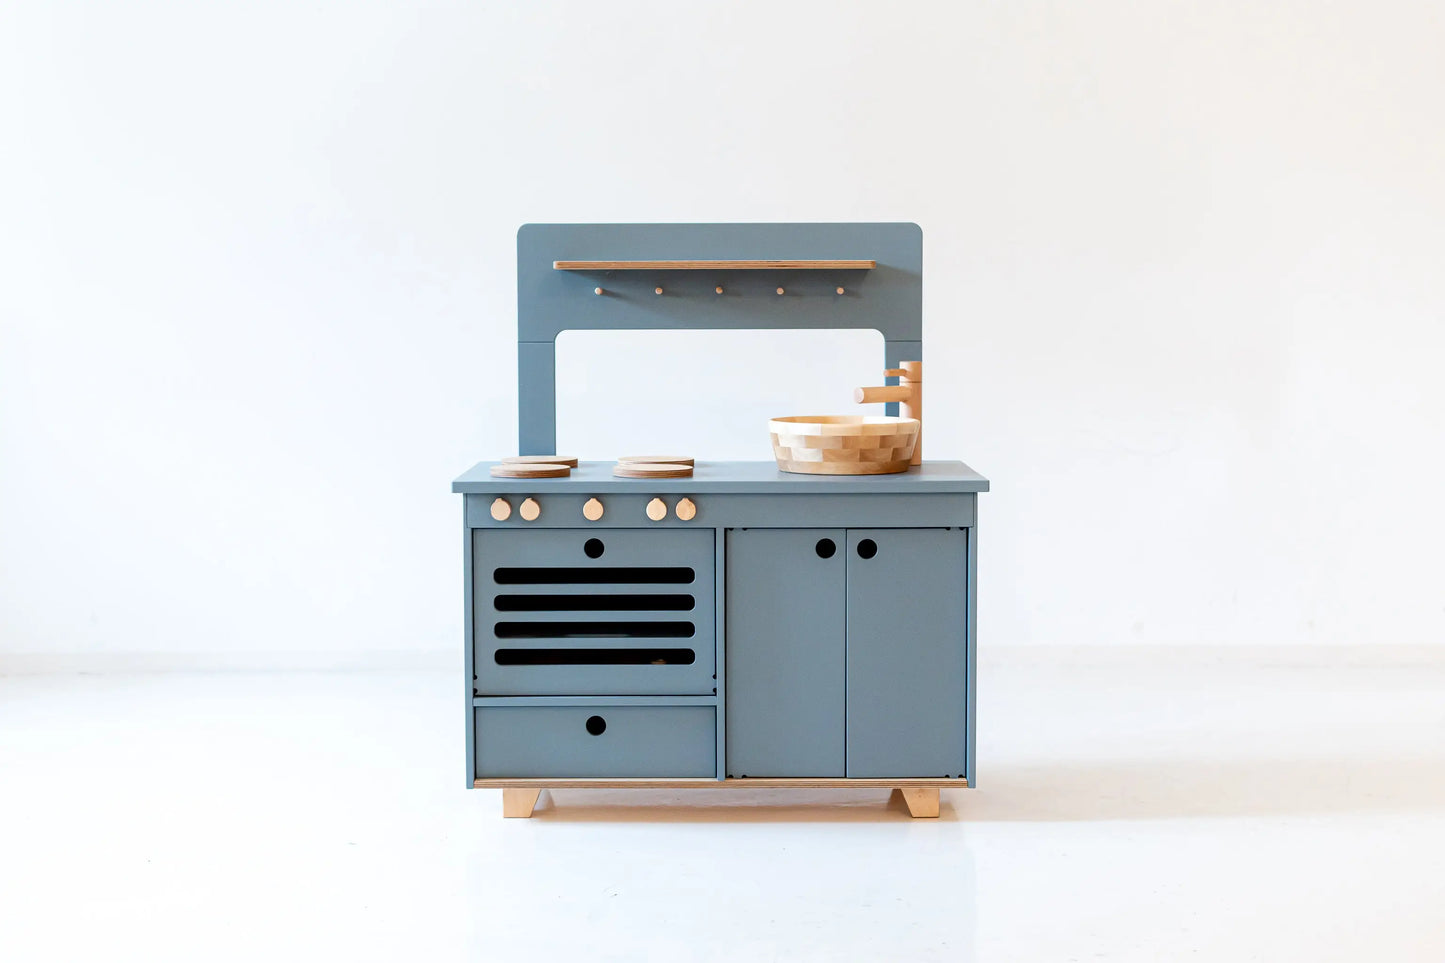 ZOE Dusty Blue Wooden Play Kitchen + MIDMINI Plywood Tea Set for FREE